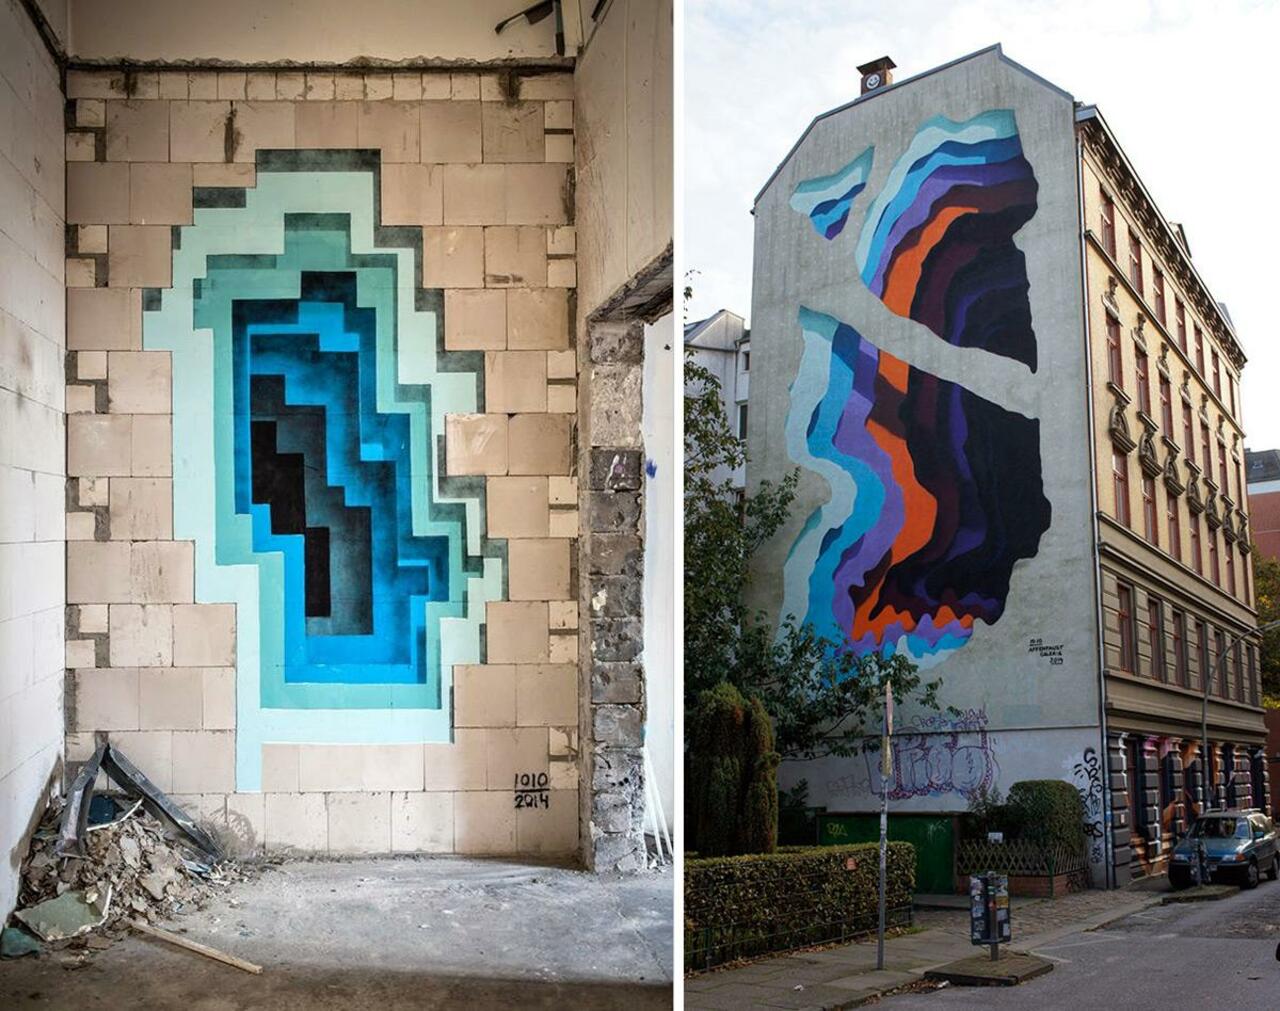 Hidden Portals of Colorful #StreetArt
#StreeArt #Mural #Colorful #Hidden #Graffiti
http://bit.ly/195each http://t.co/LVAO0NYrR1